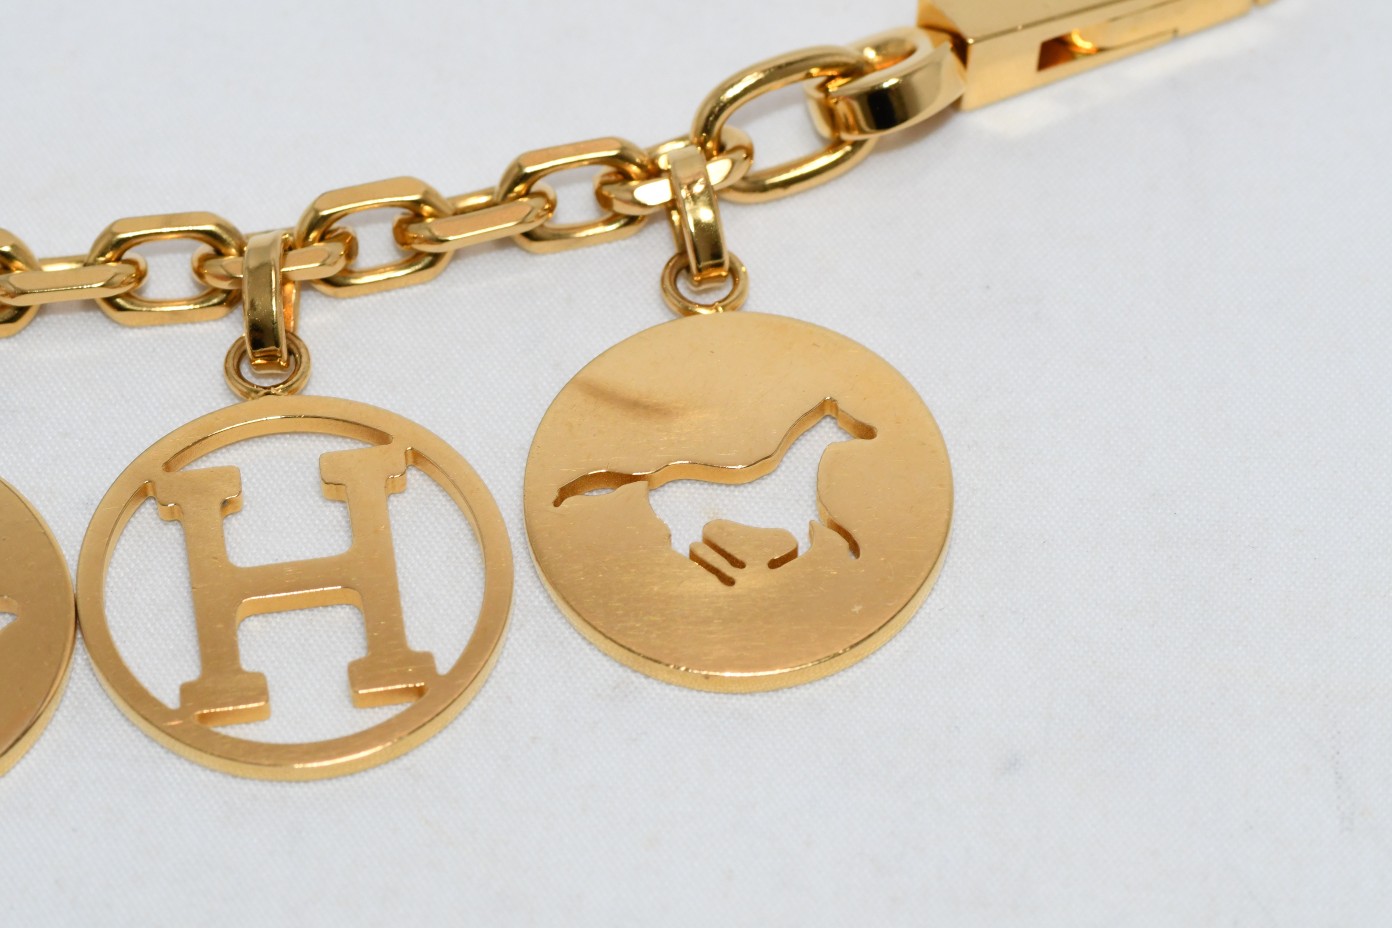 Hermes Breloque Olga Bag Charm Gold Limited Edition New w/Box